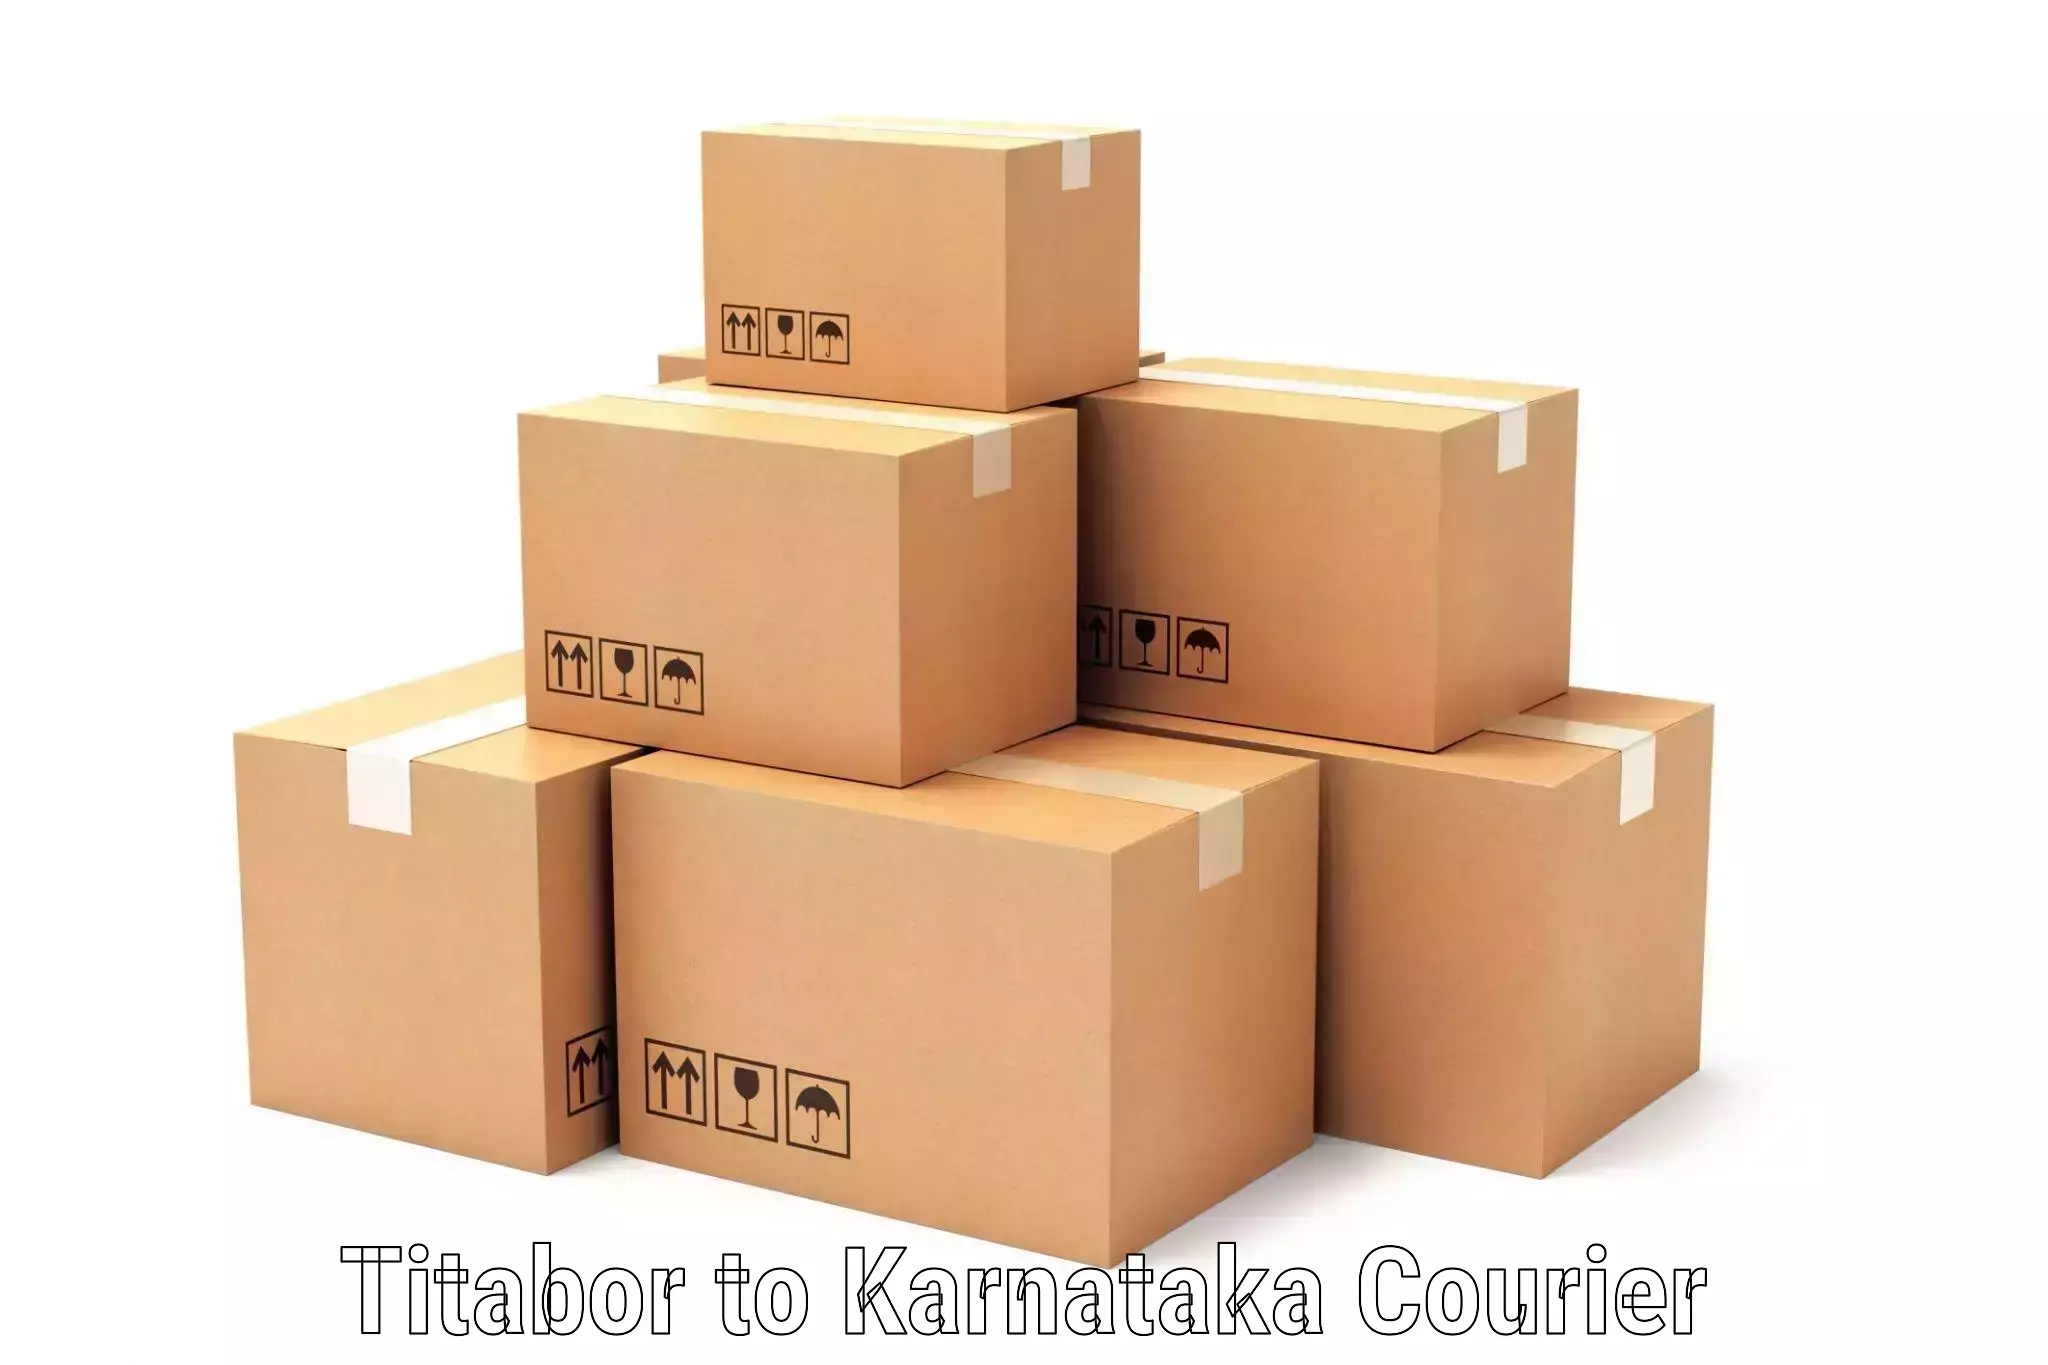 Courier service efficiency Titabor to Karnataka